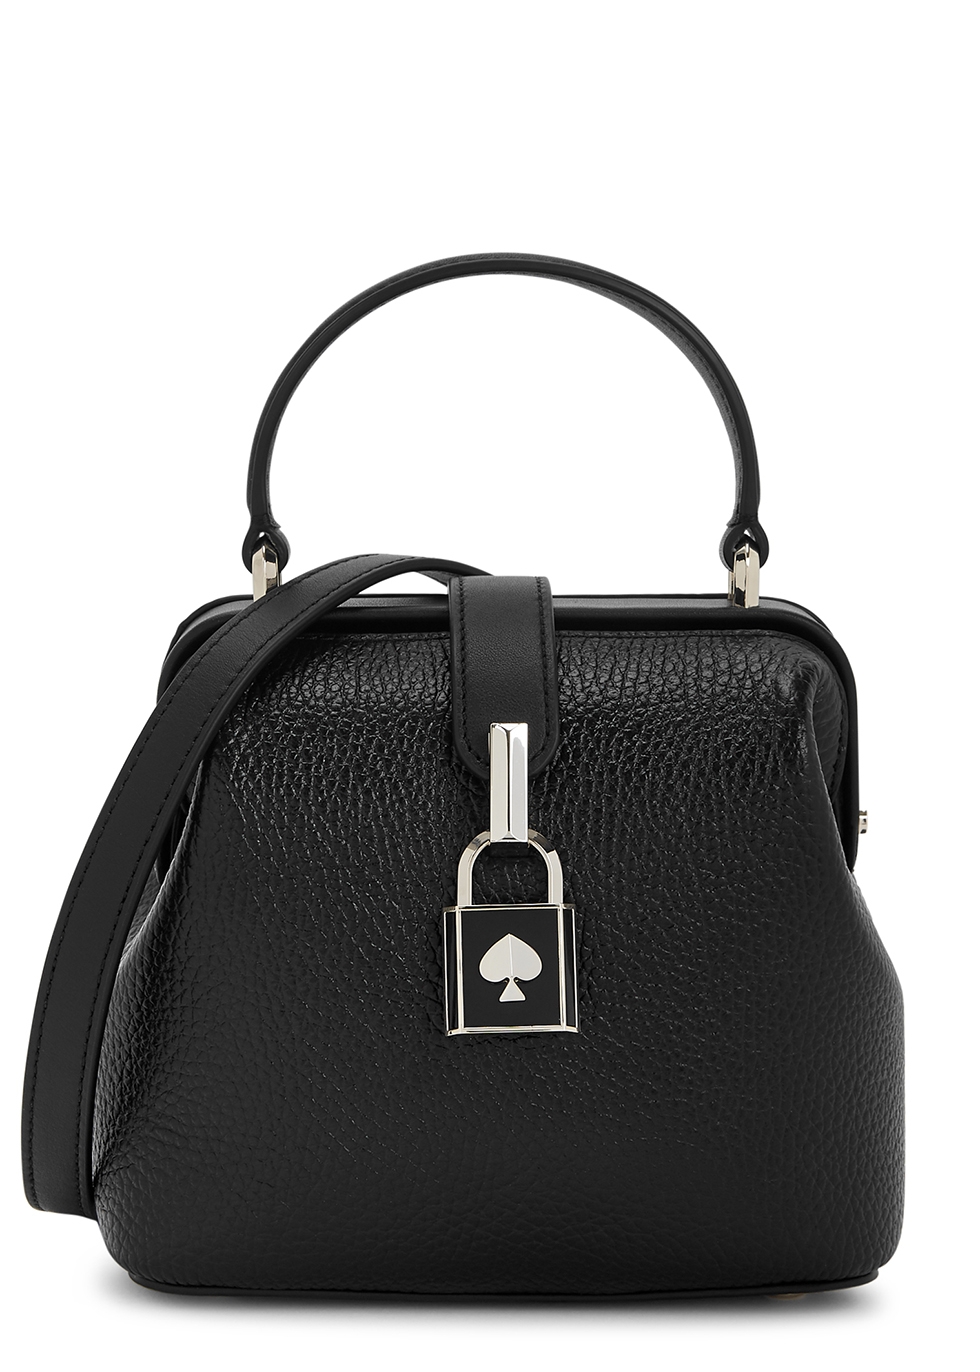 Kate Spade New York Remedy small leather top handle bag - Harvey Nichols